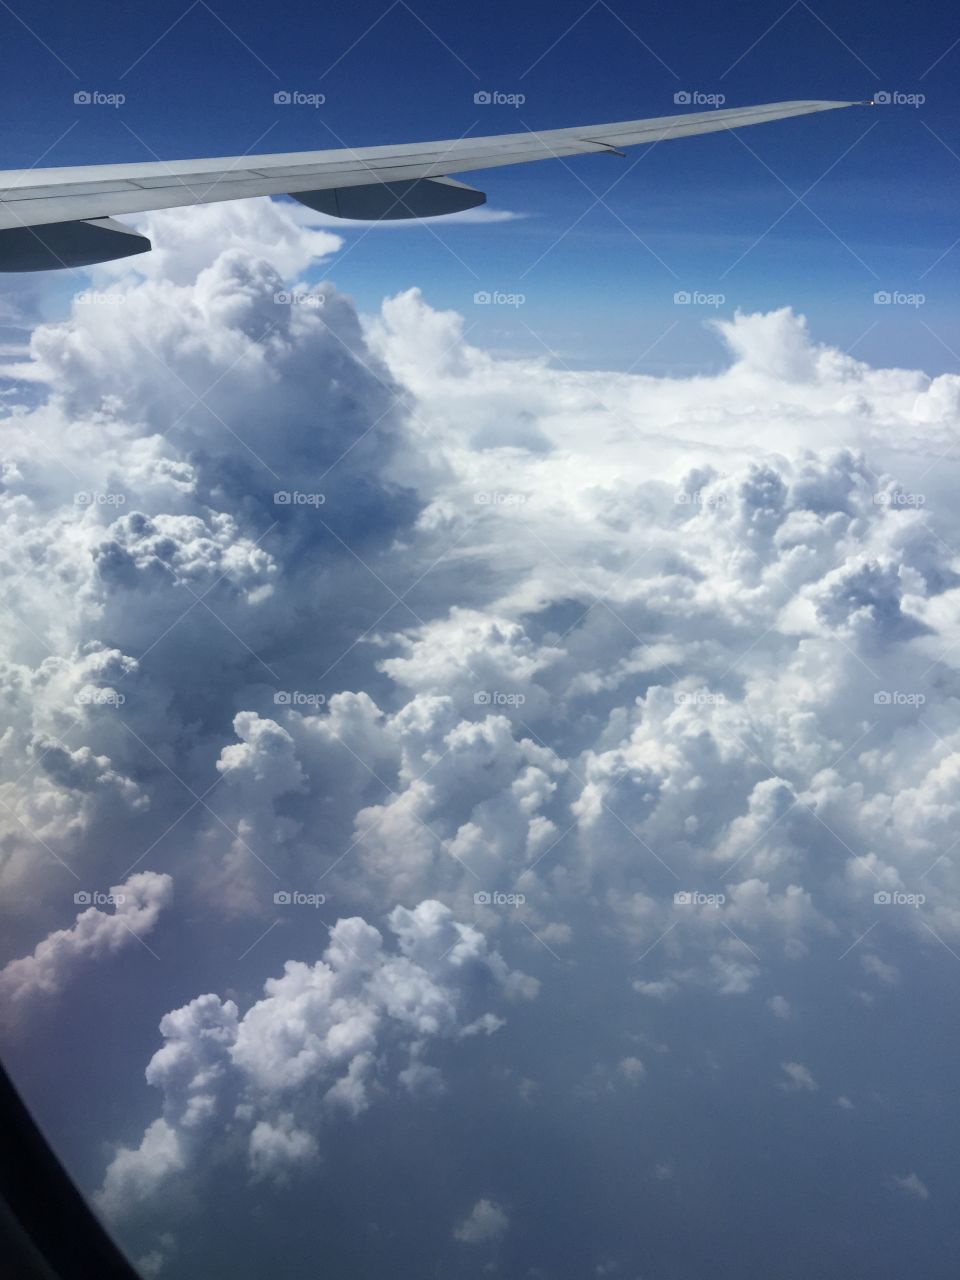 Clouds
Thailand